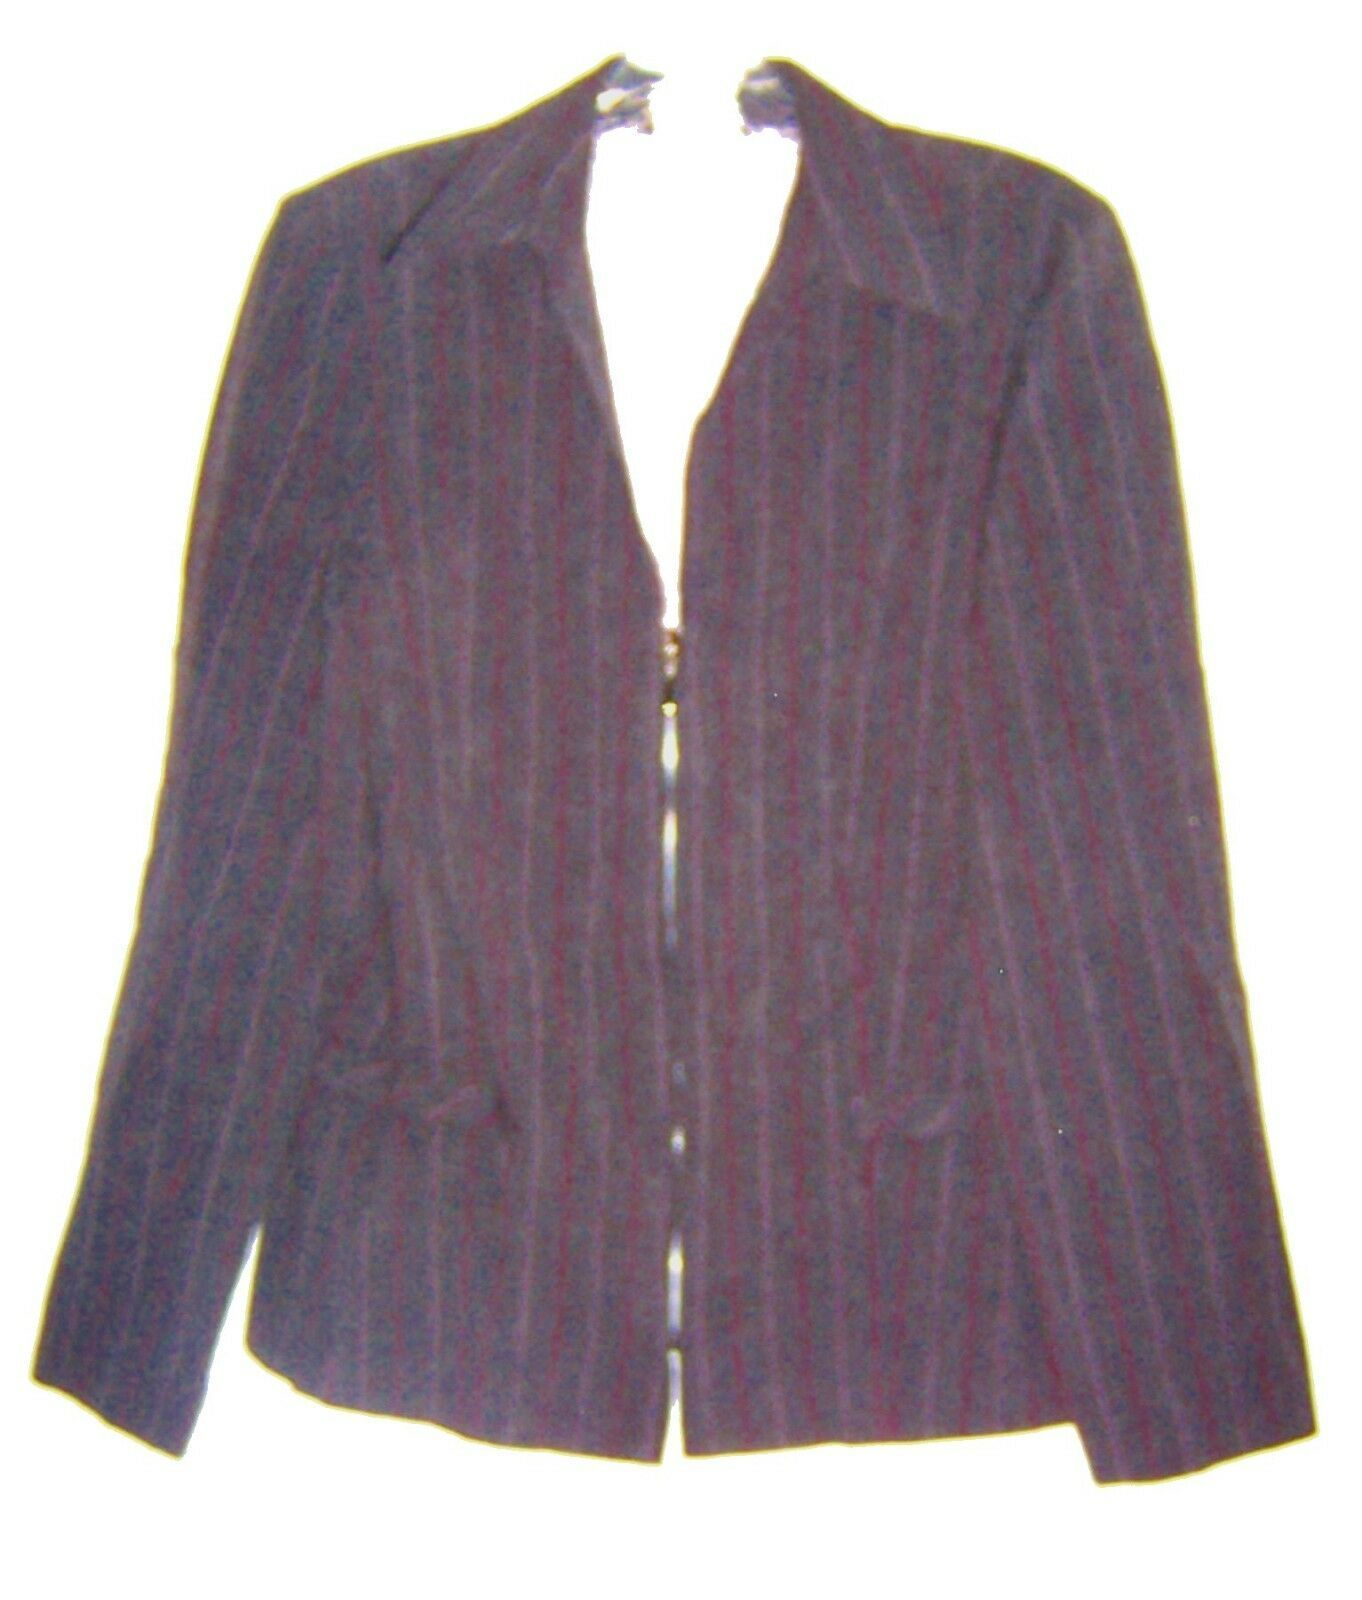 Primary image for Studio C Gray Pinstripe Blazer Business Suit Jacket Zip Up Front Jacket Sz 6